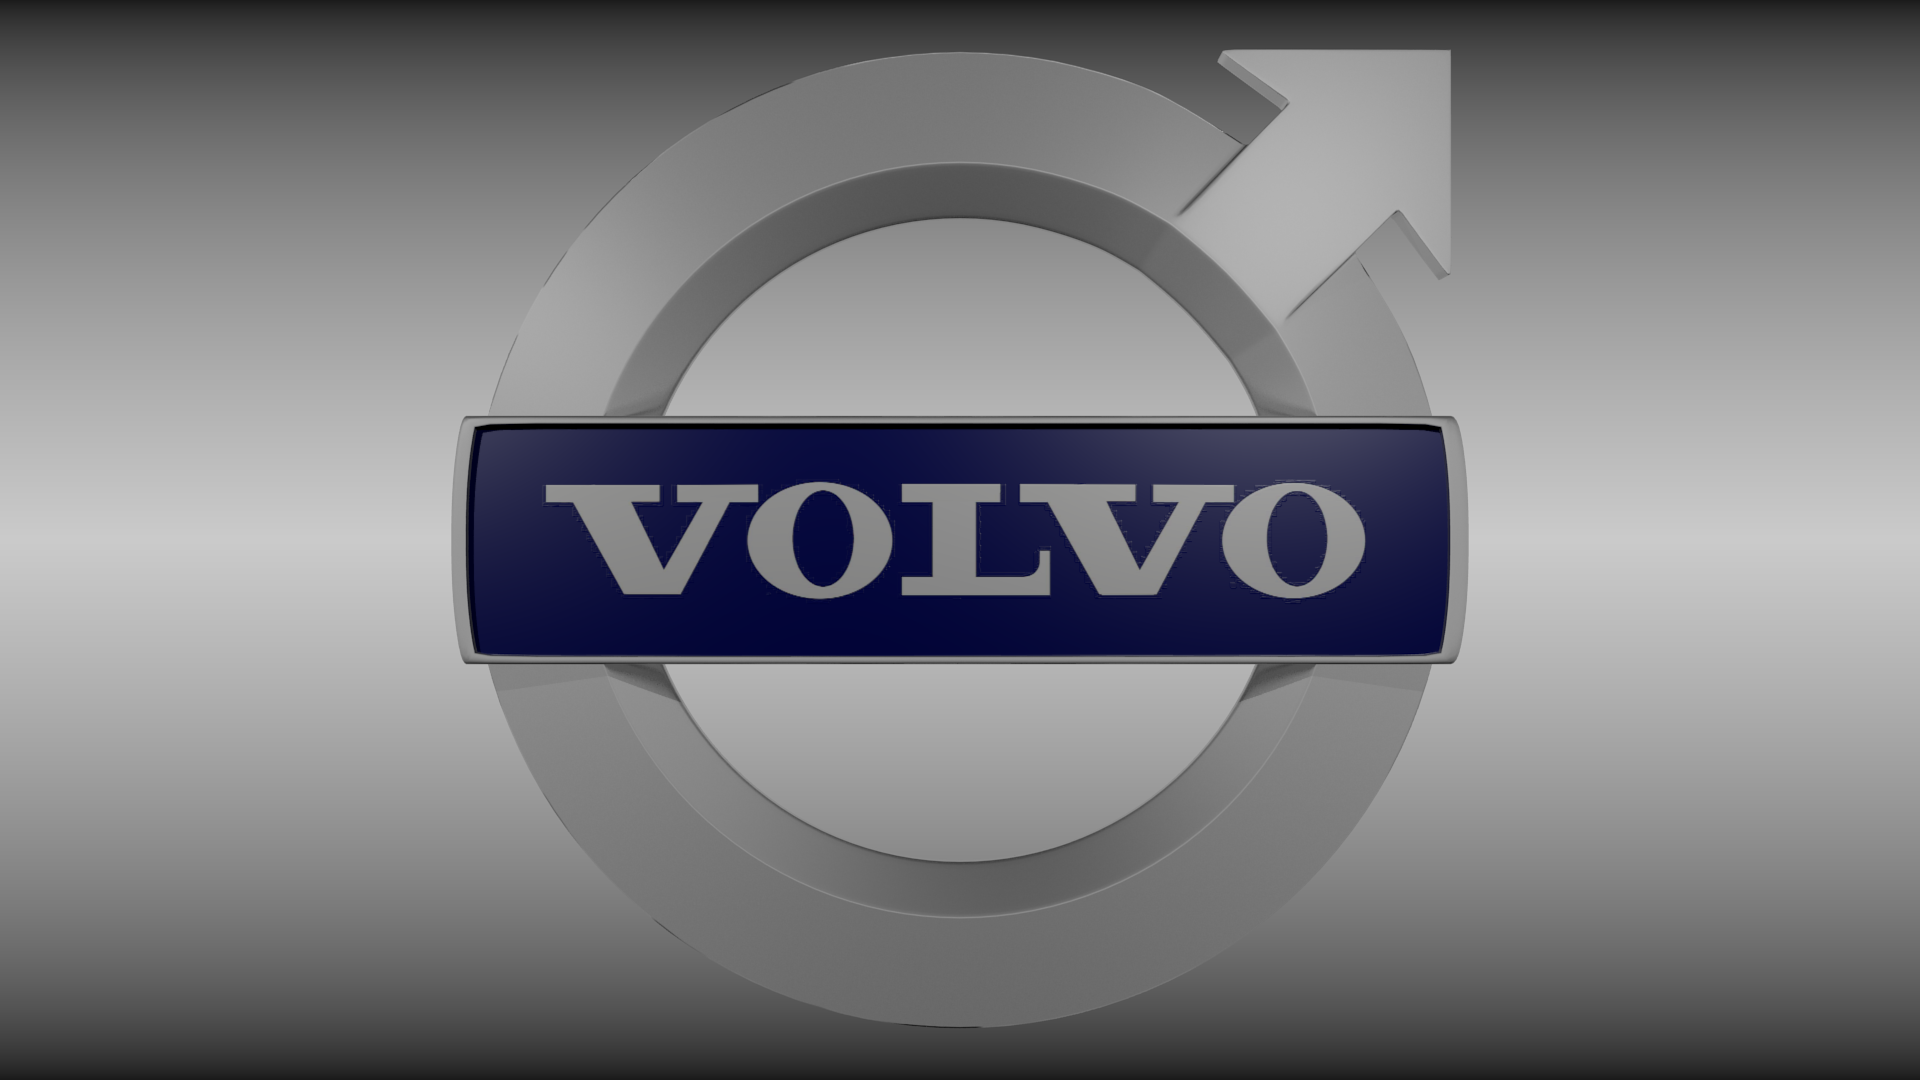 Volvo wybrało obsługę public relations Public Relations volvo logo 3d model obj blend d895514b b327 48e3 9145 9dd0a36e3560